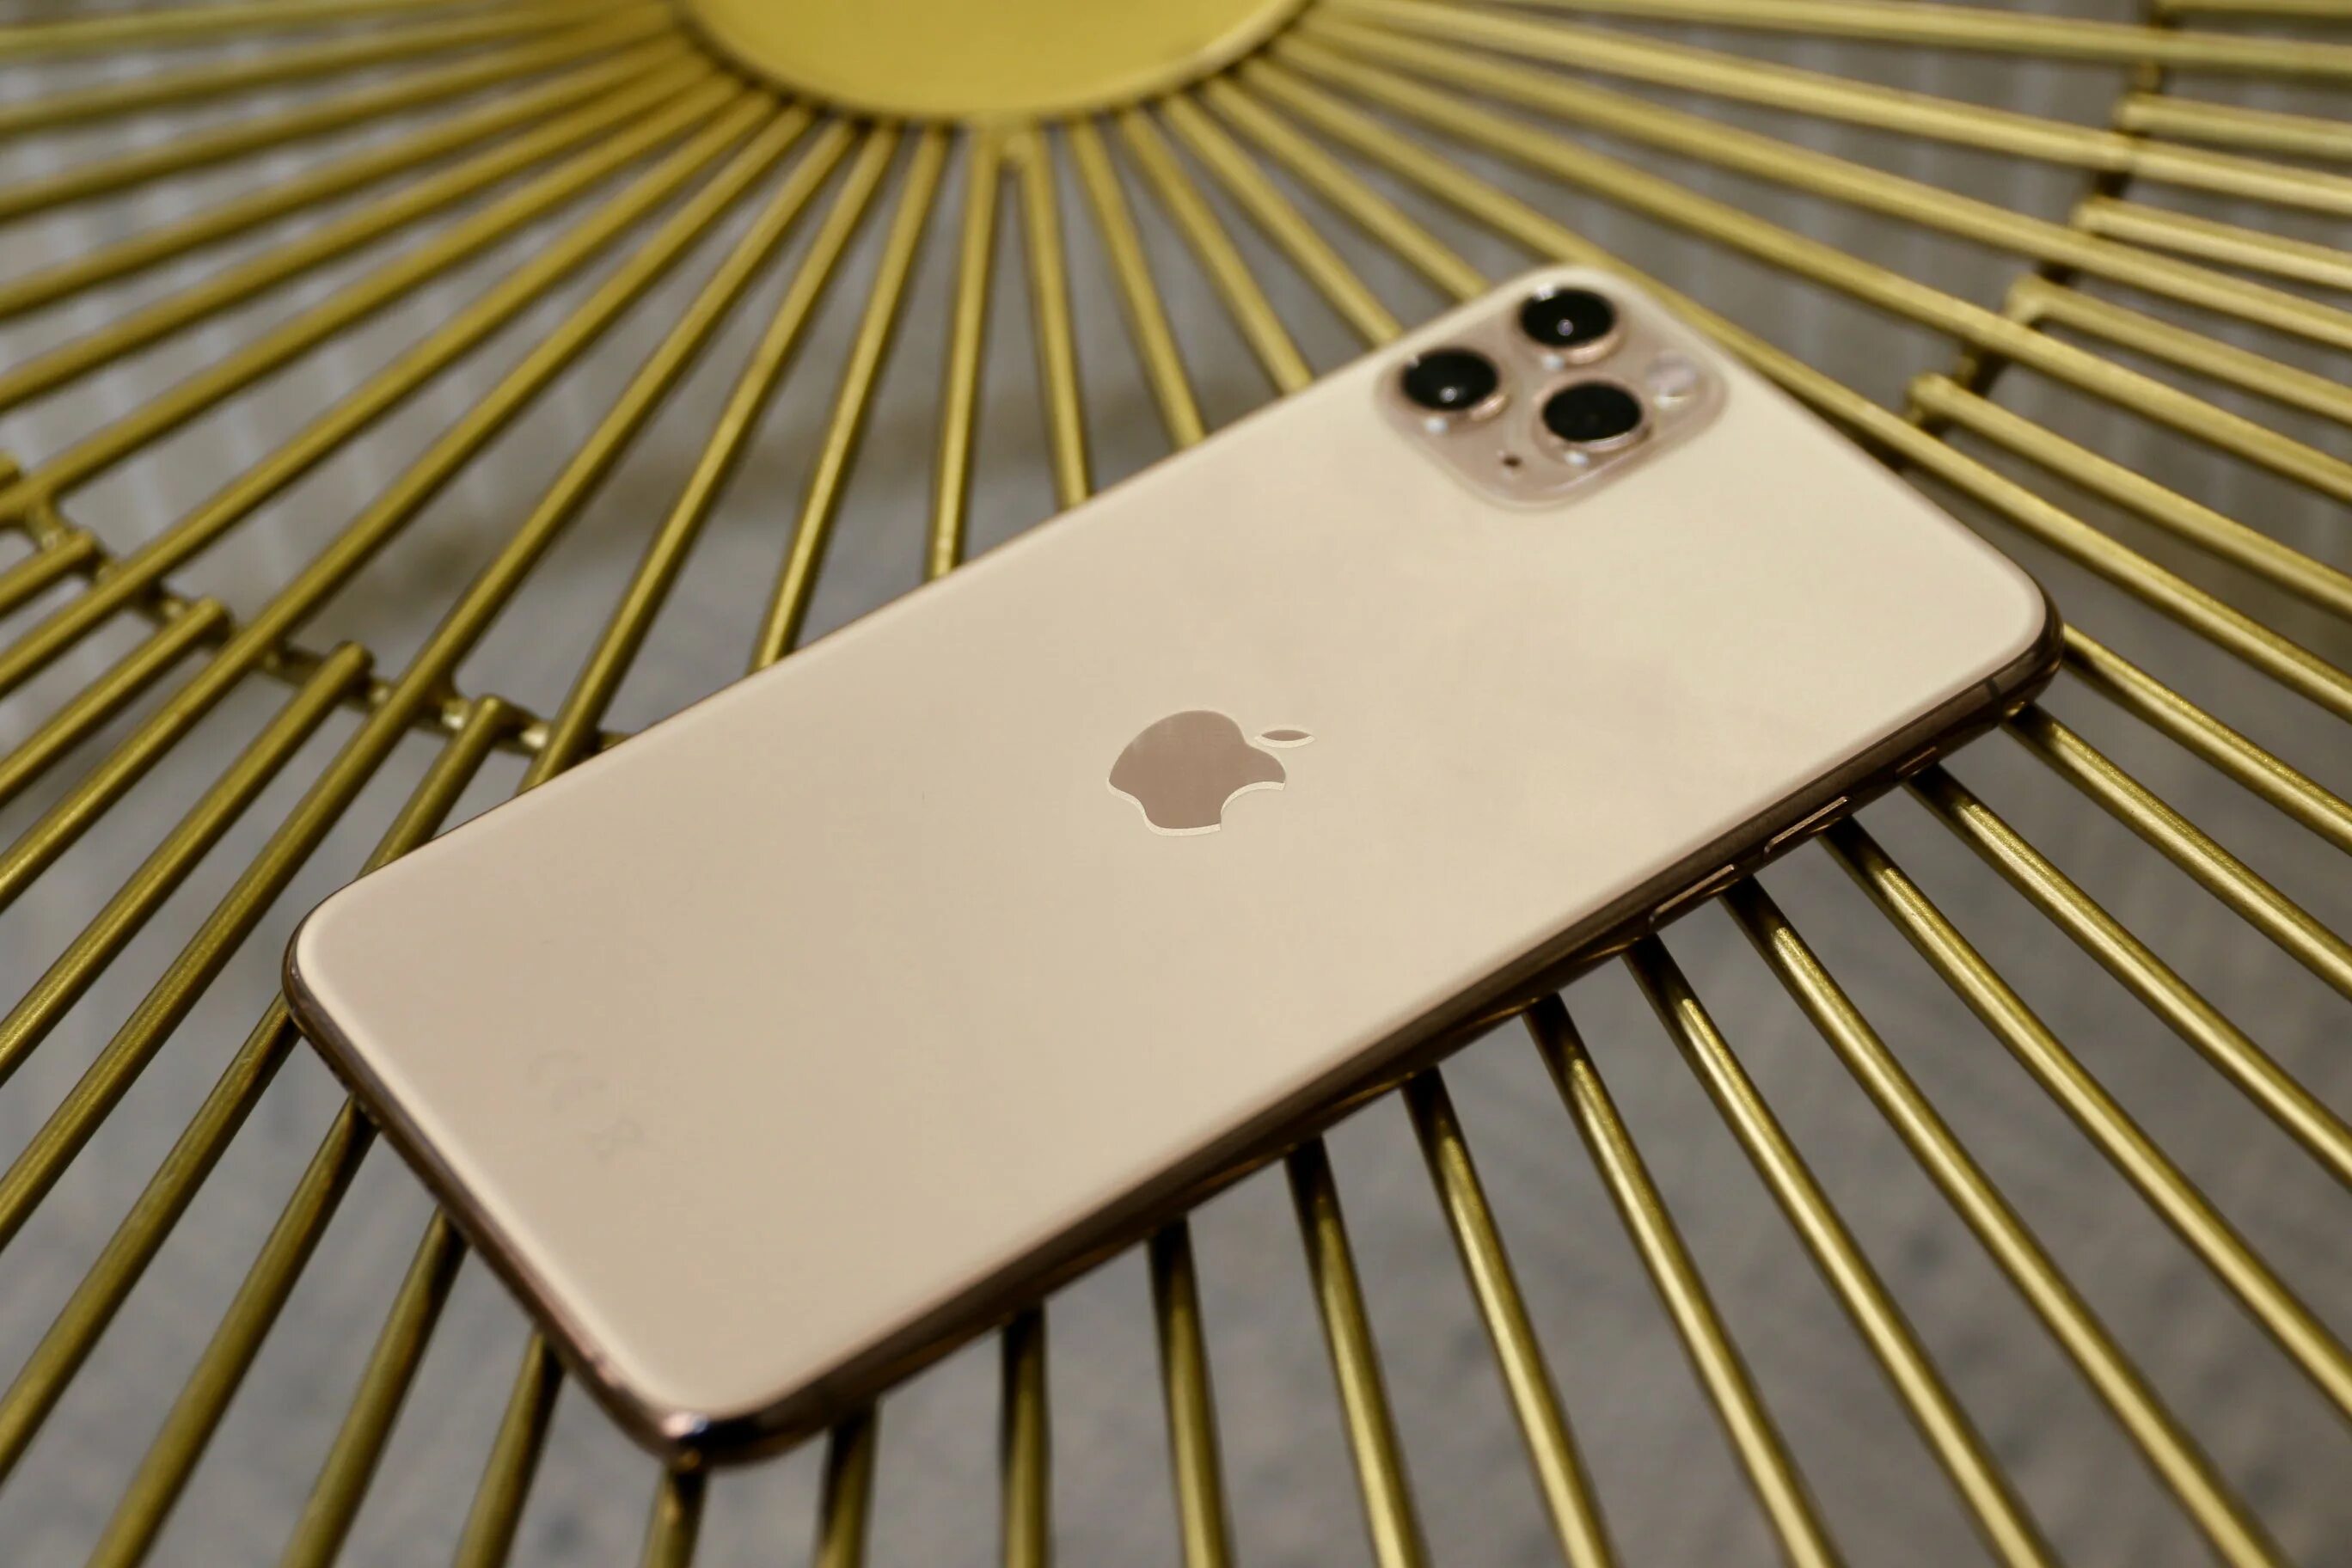 11 pro gold. Iphone 11 Pro Max 64gb Gold. Apple 11 Pro. Iphone 11 Pro 64gb Gold. Айфон 12 Промакс золотой.